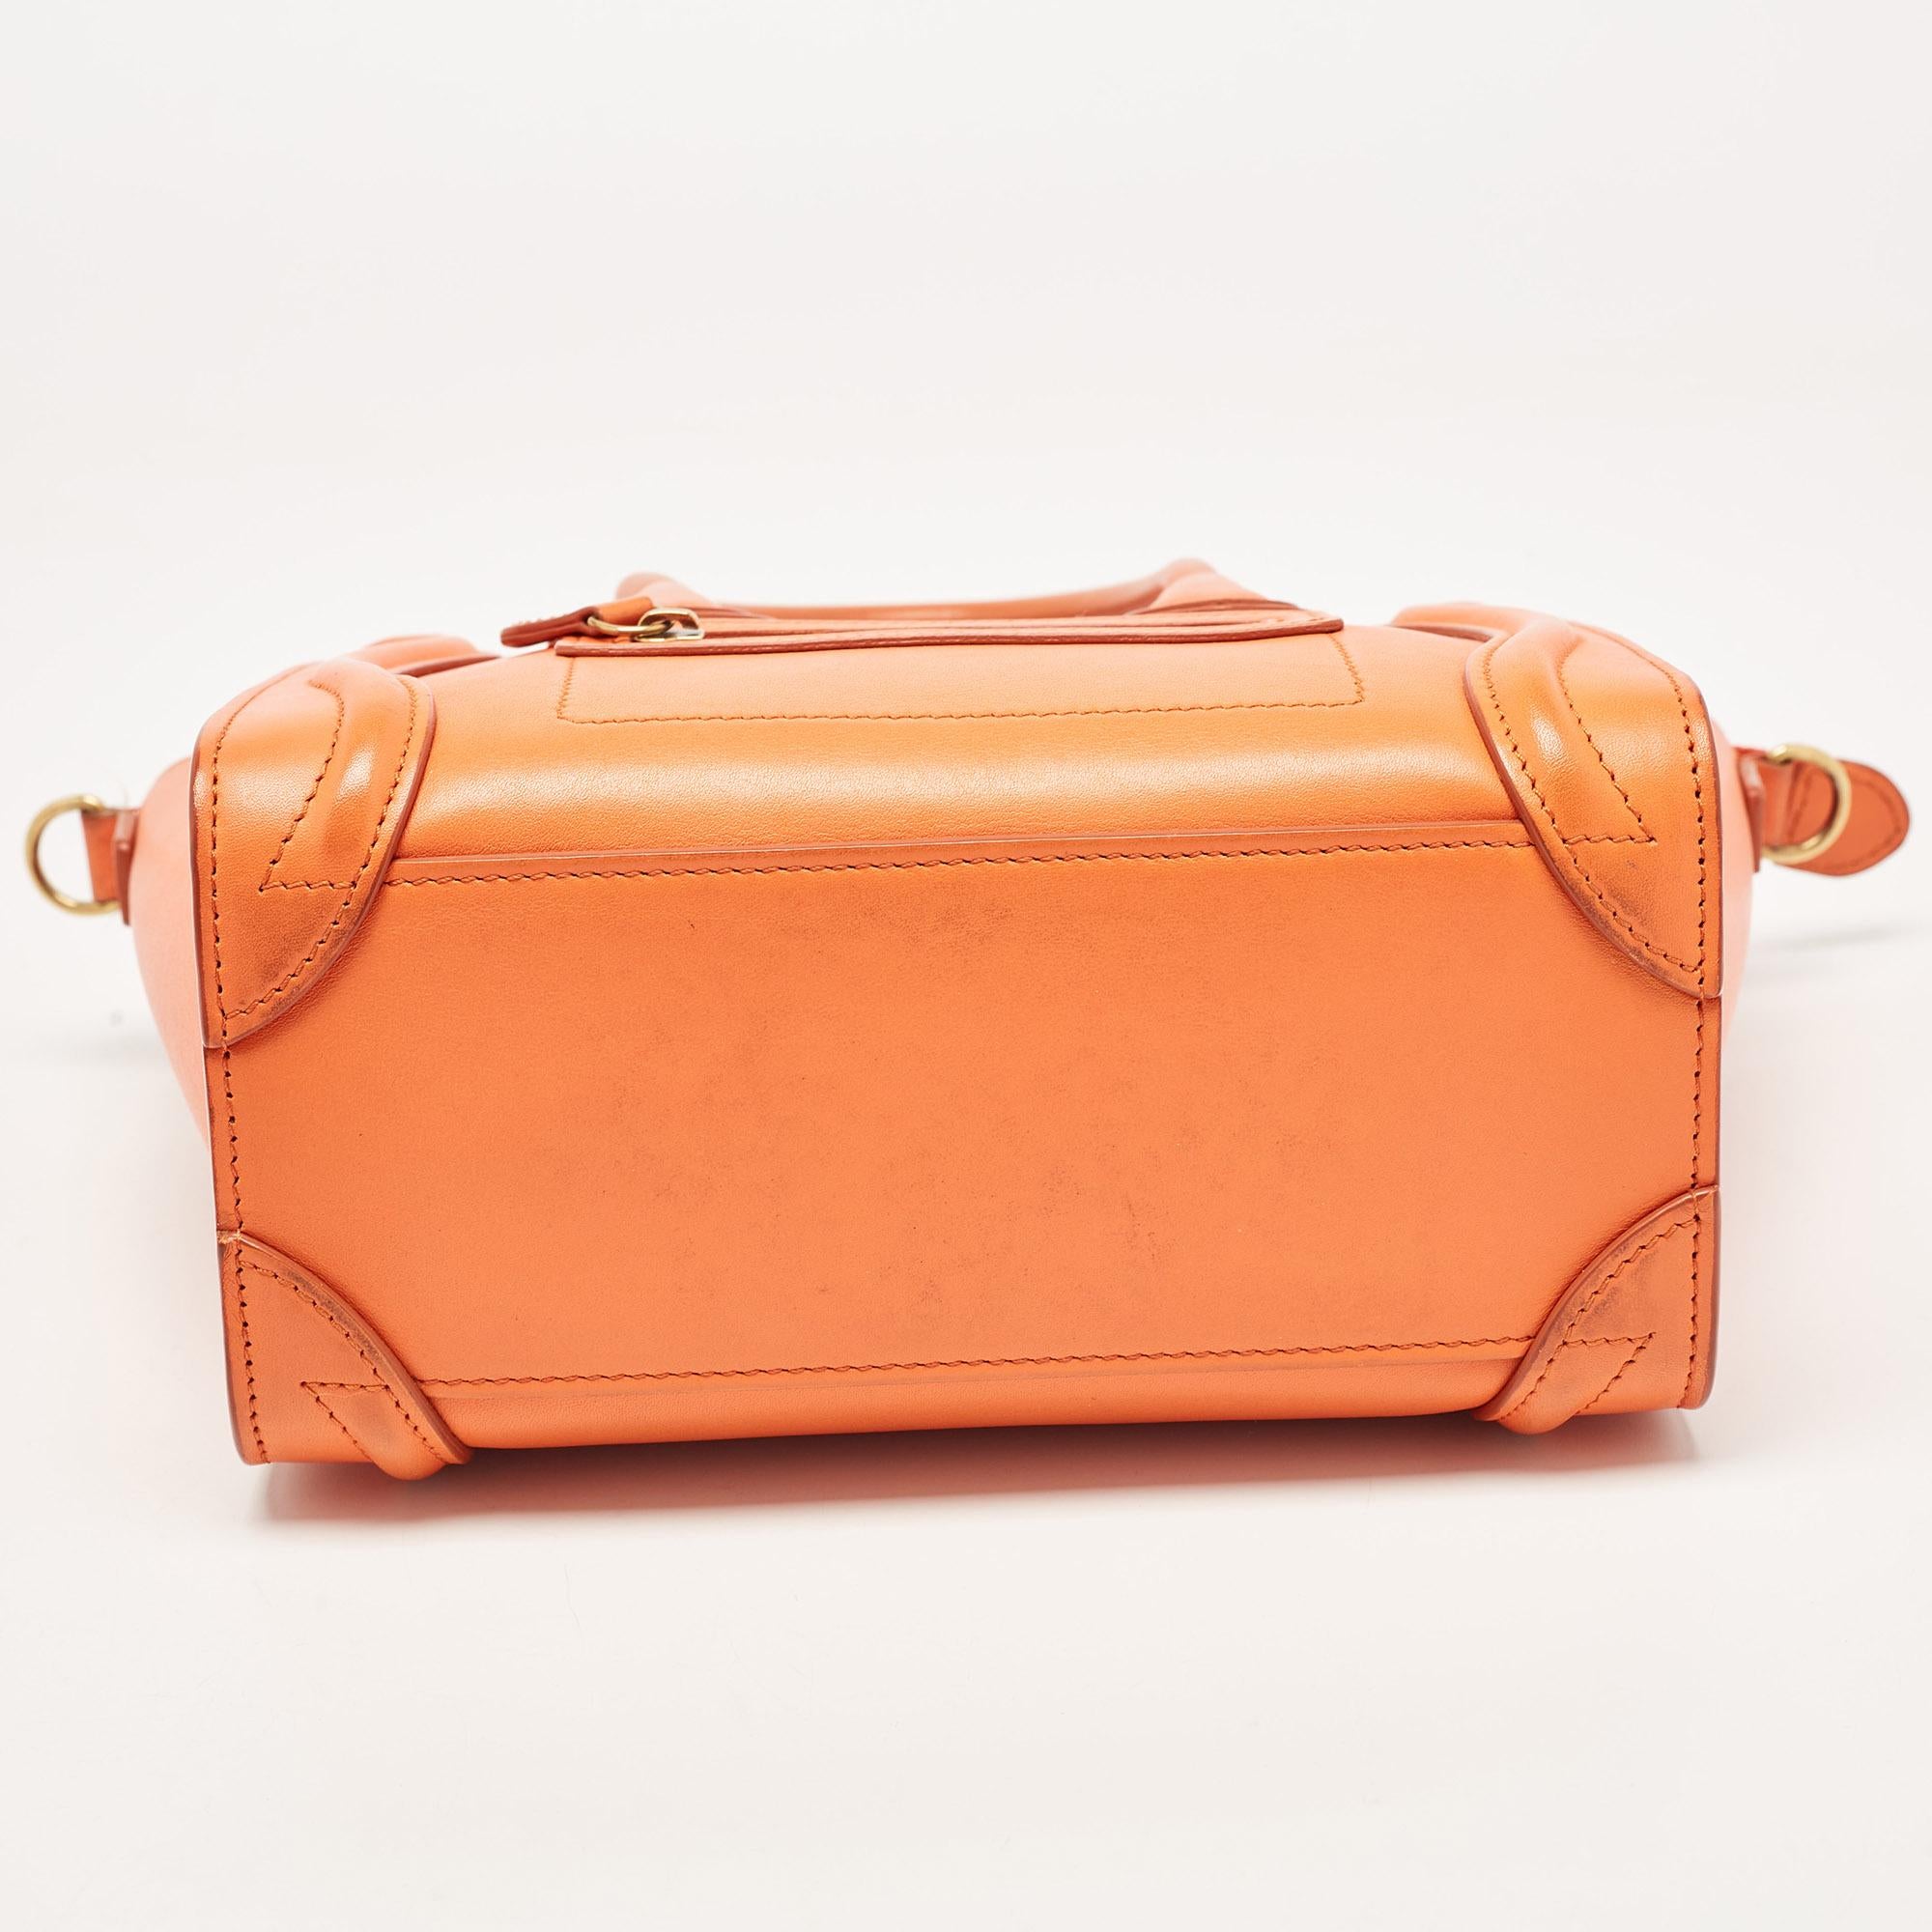 Céline Orange Leather Nano Luggage Tote 3